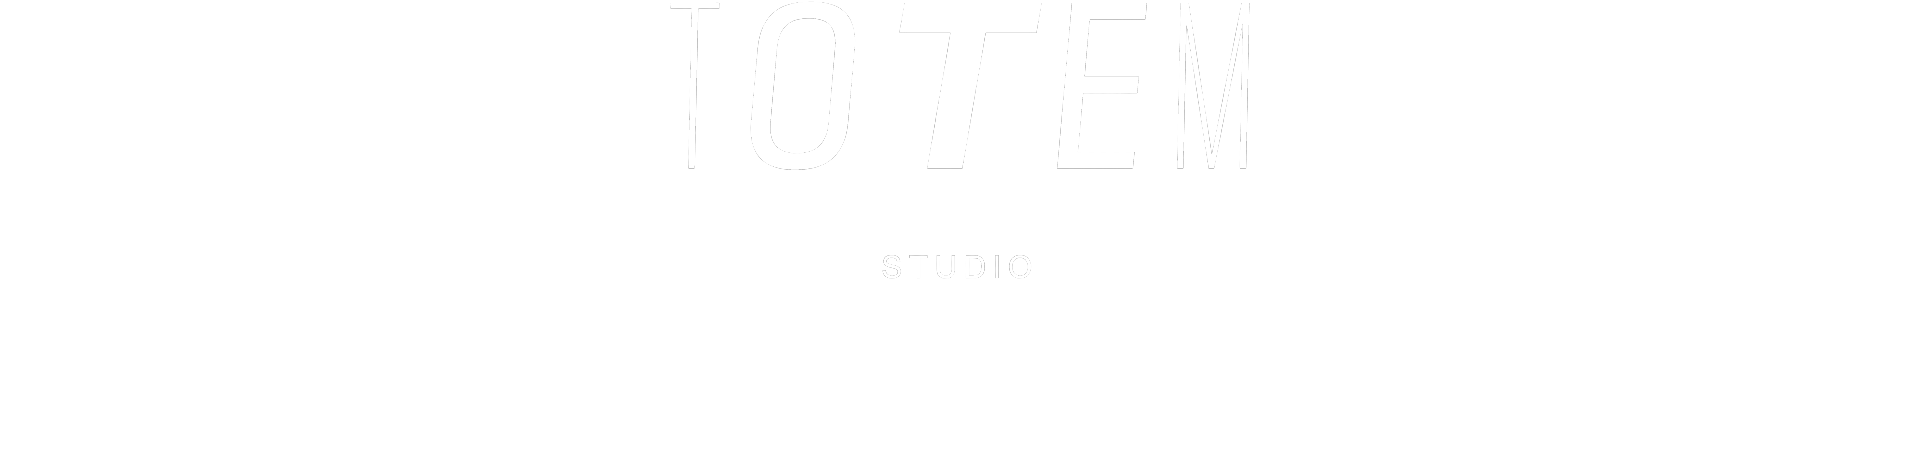 Totem Studio Warsaw